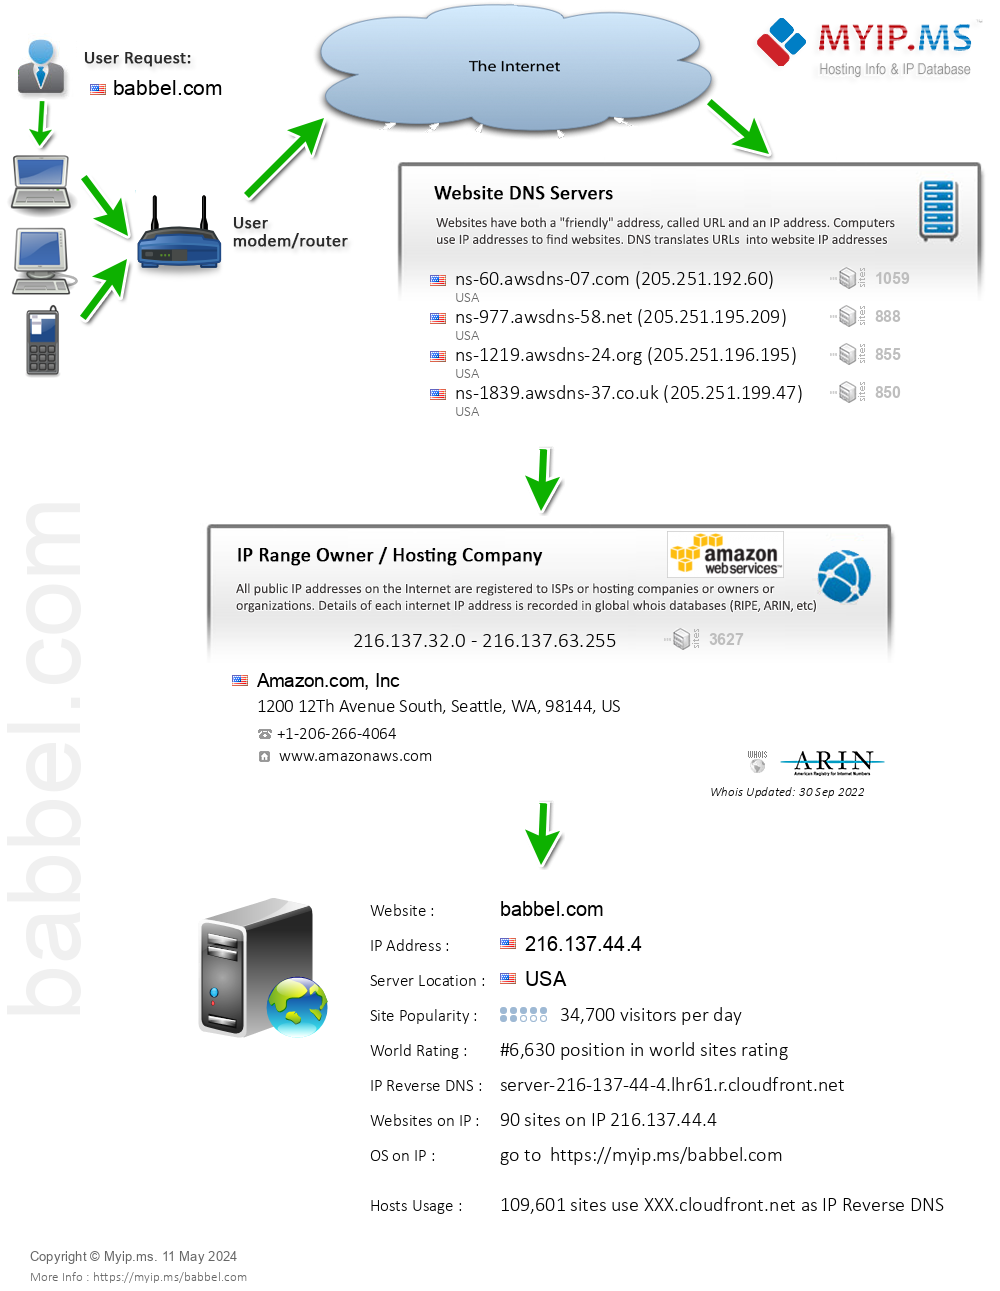 Babbel.com - Website Hosting Visual IP Diagram